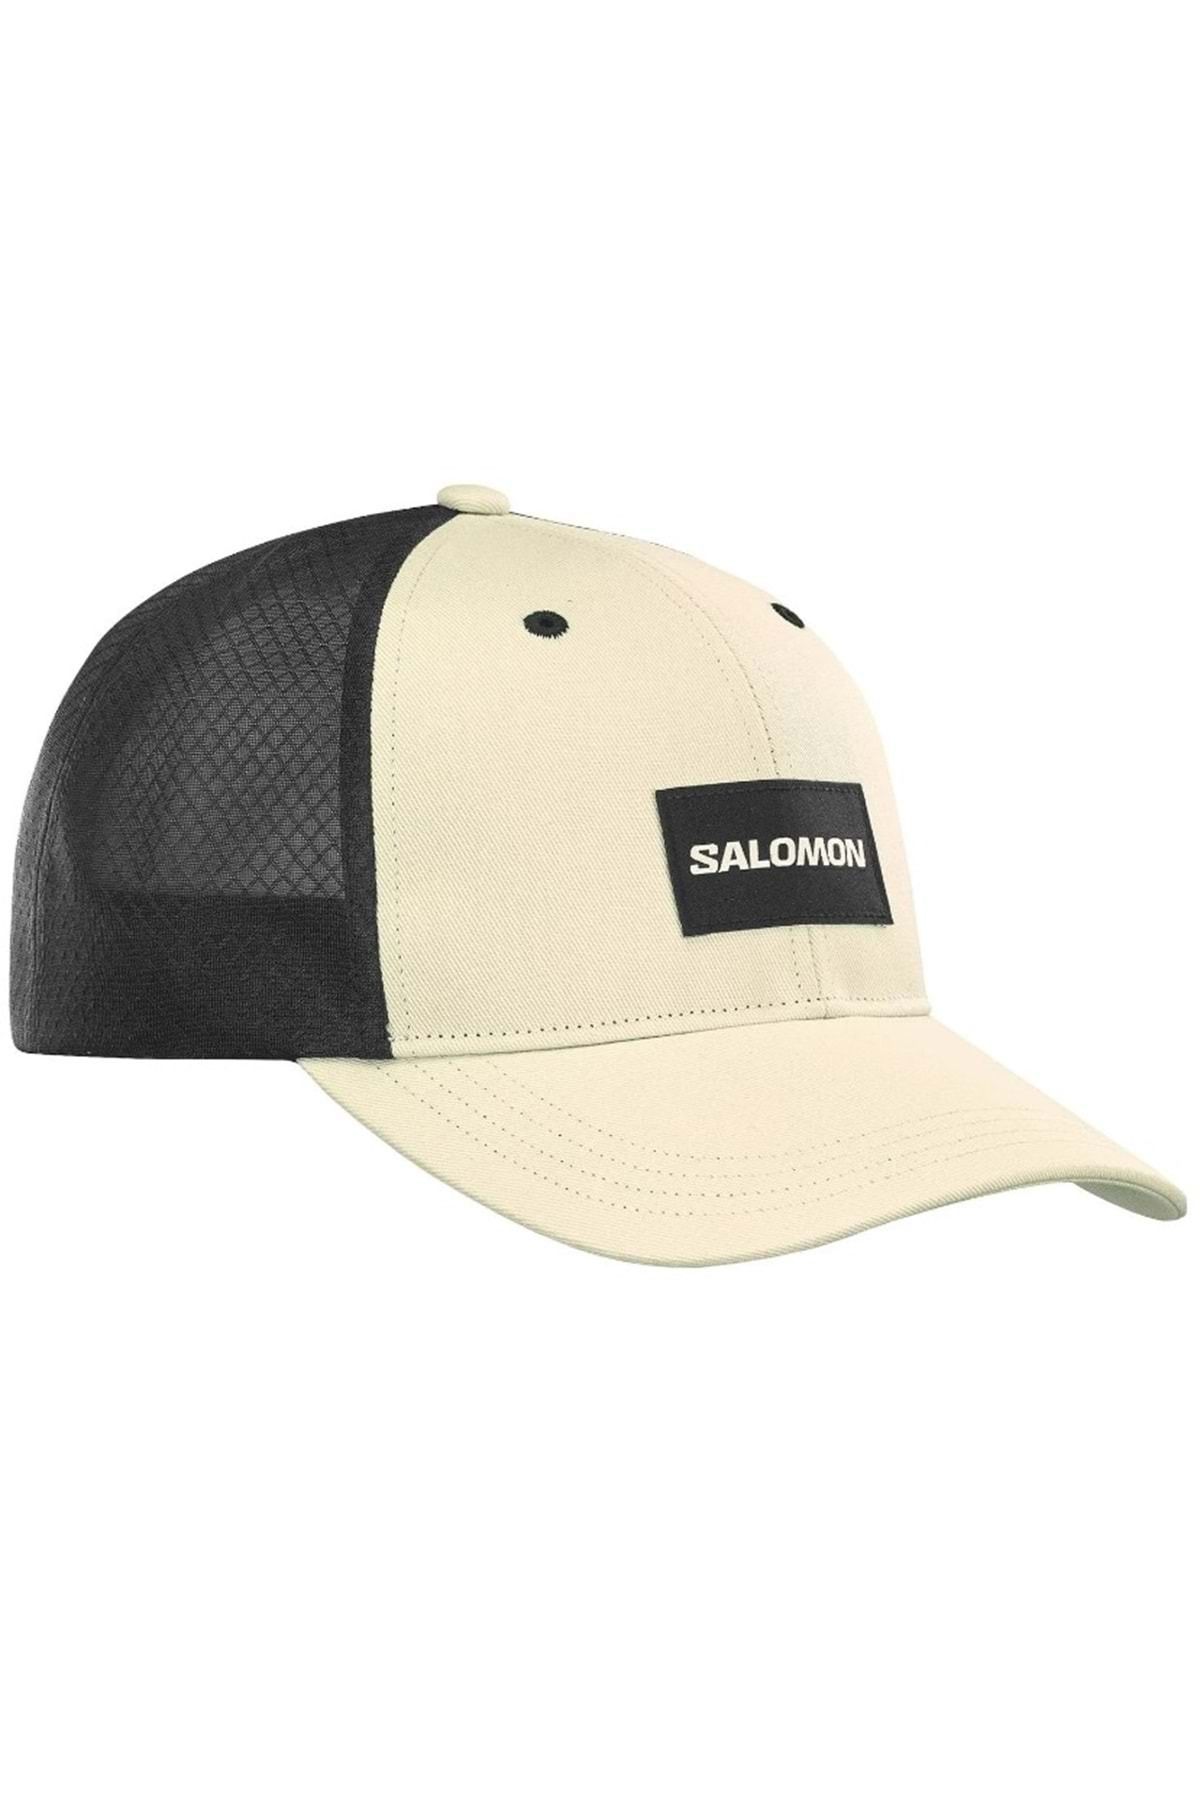 Salomon درپوش خمیده کامیون کلاه بژ unisex